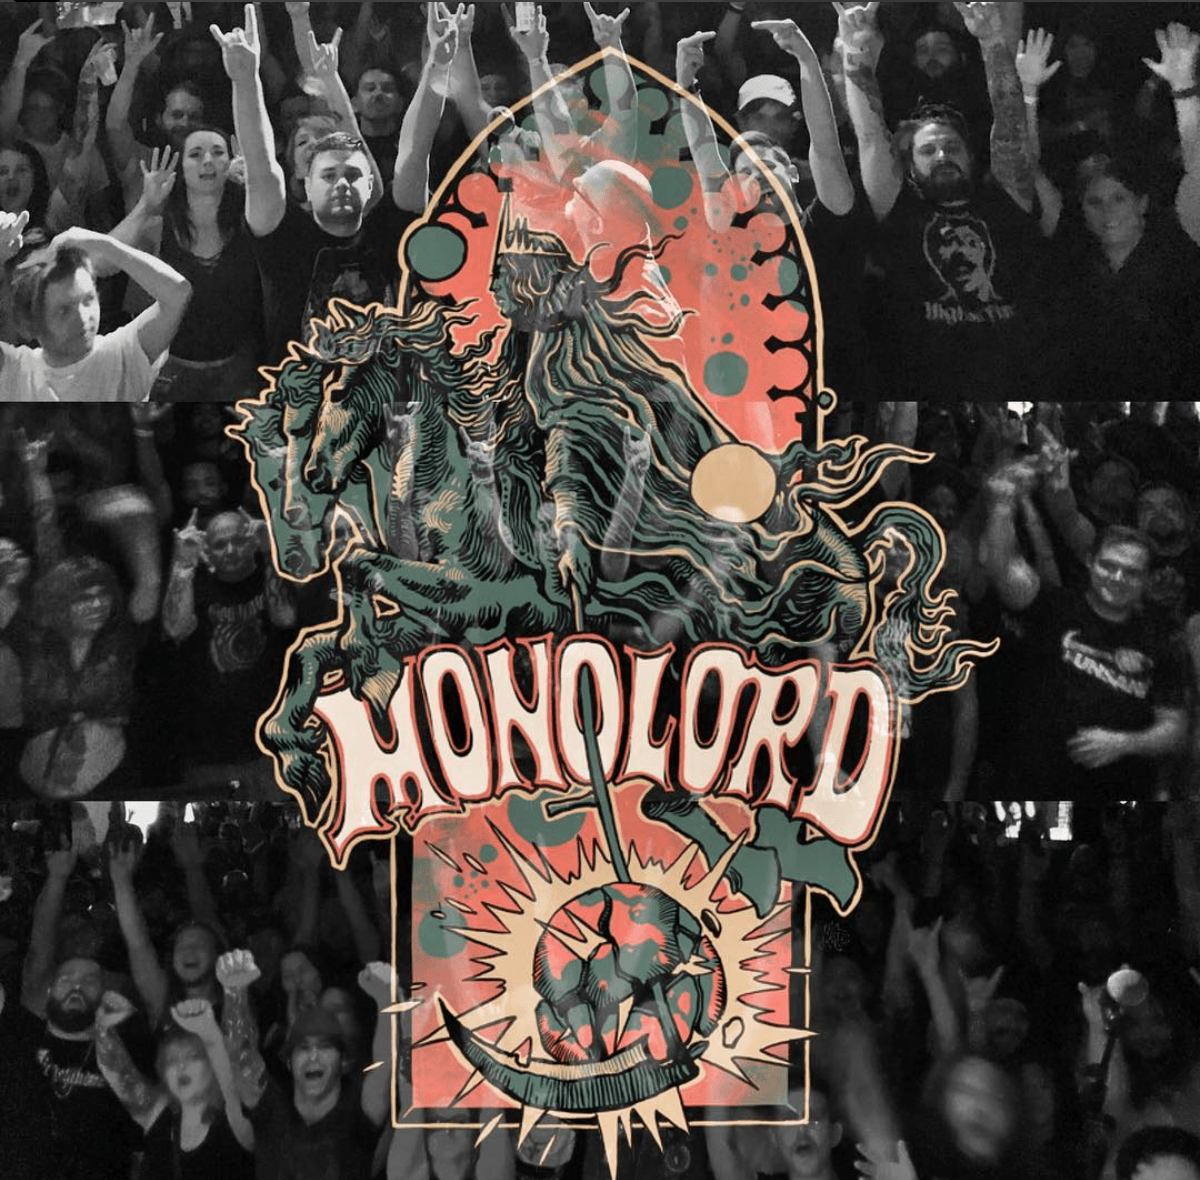 Monolord 9/10 – Saint Vitus